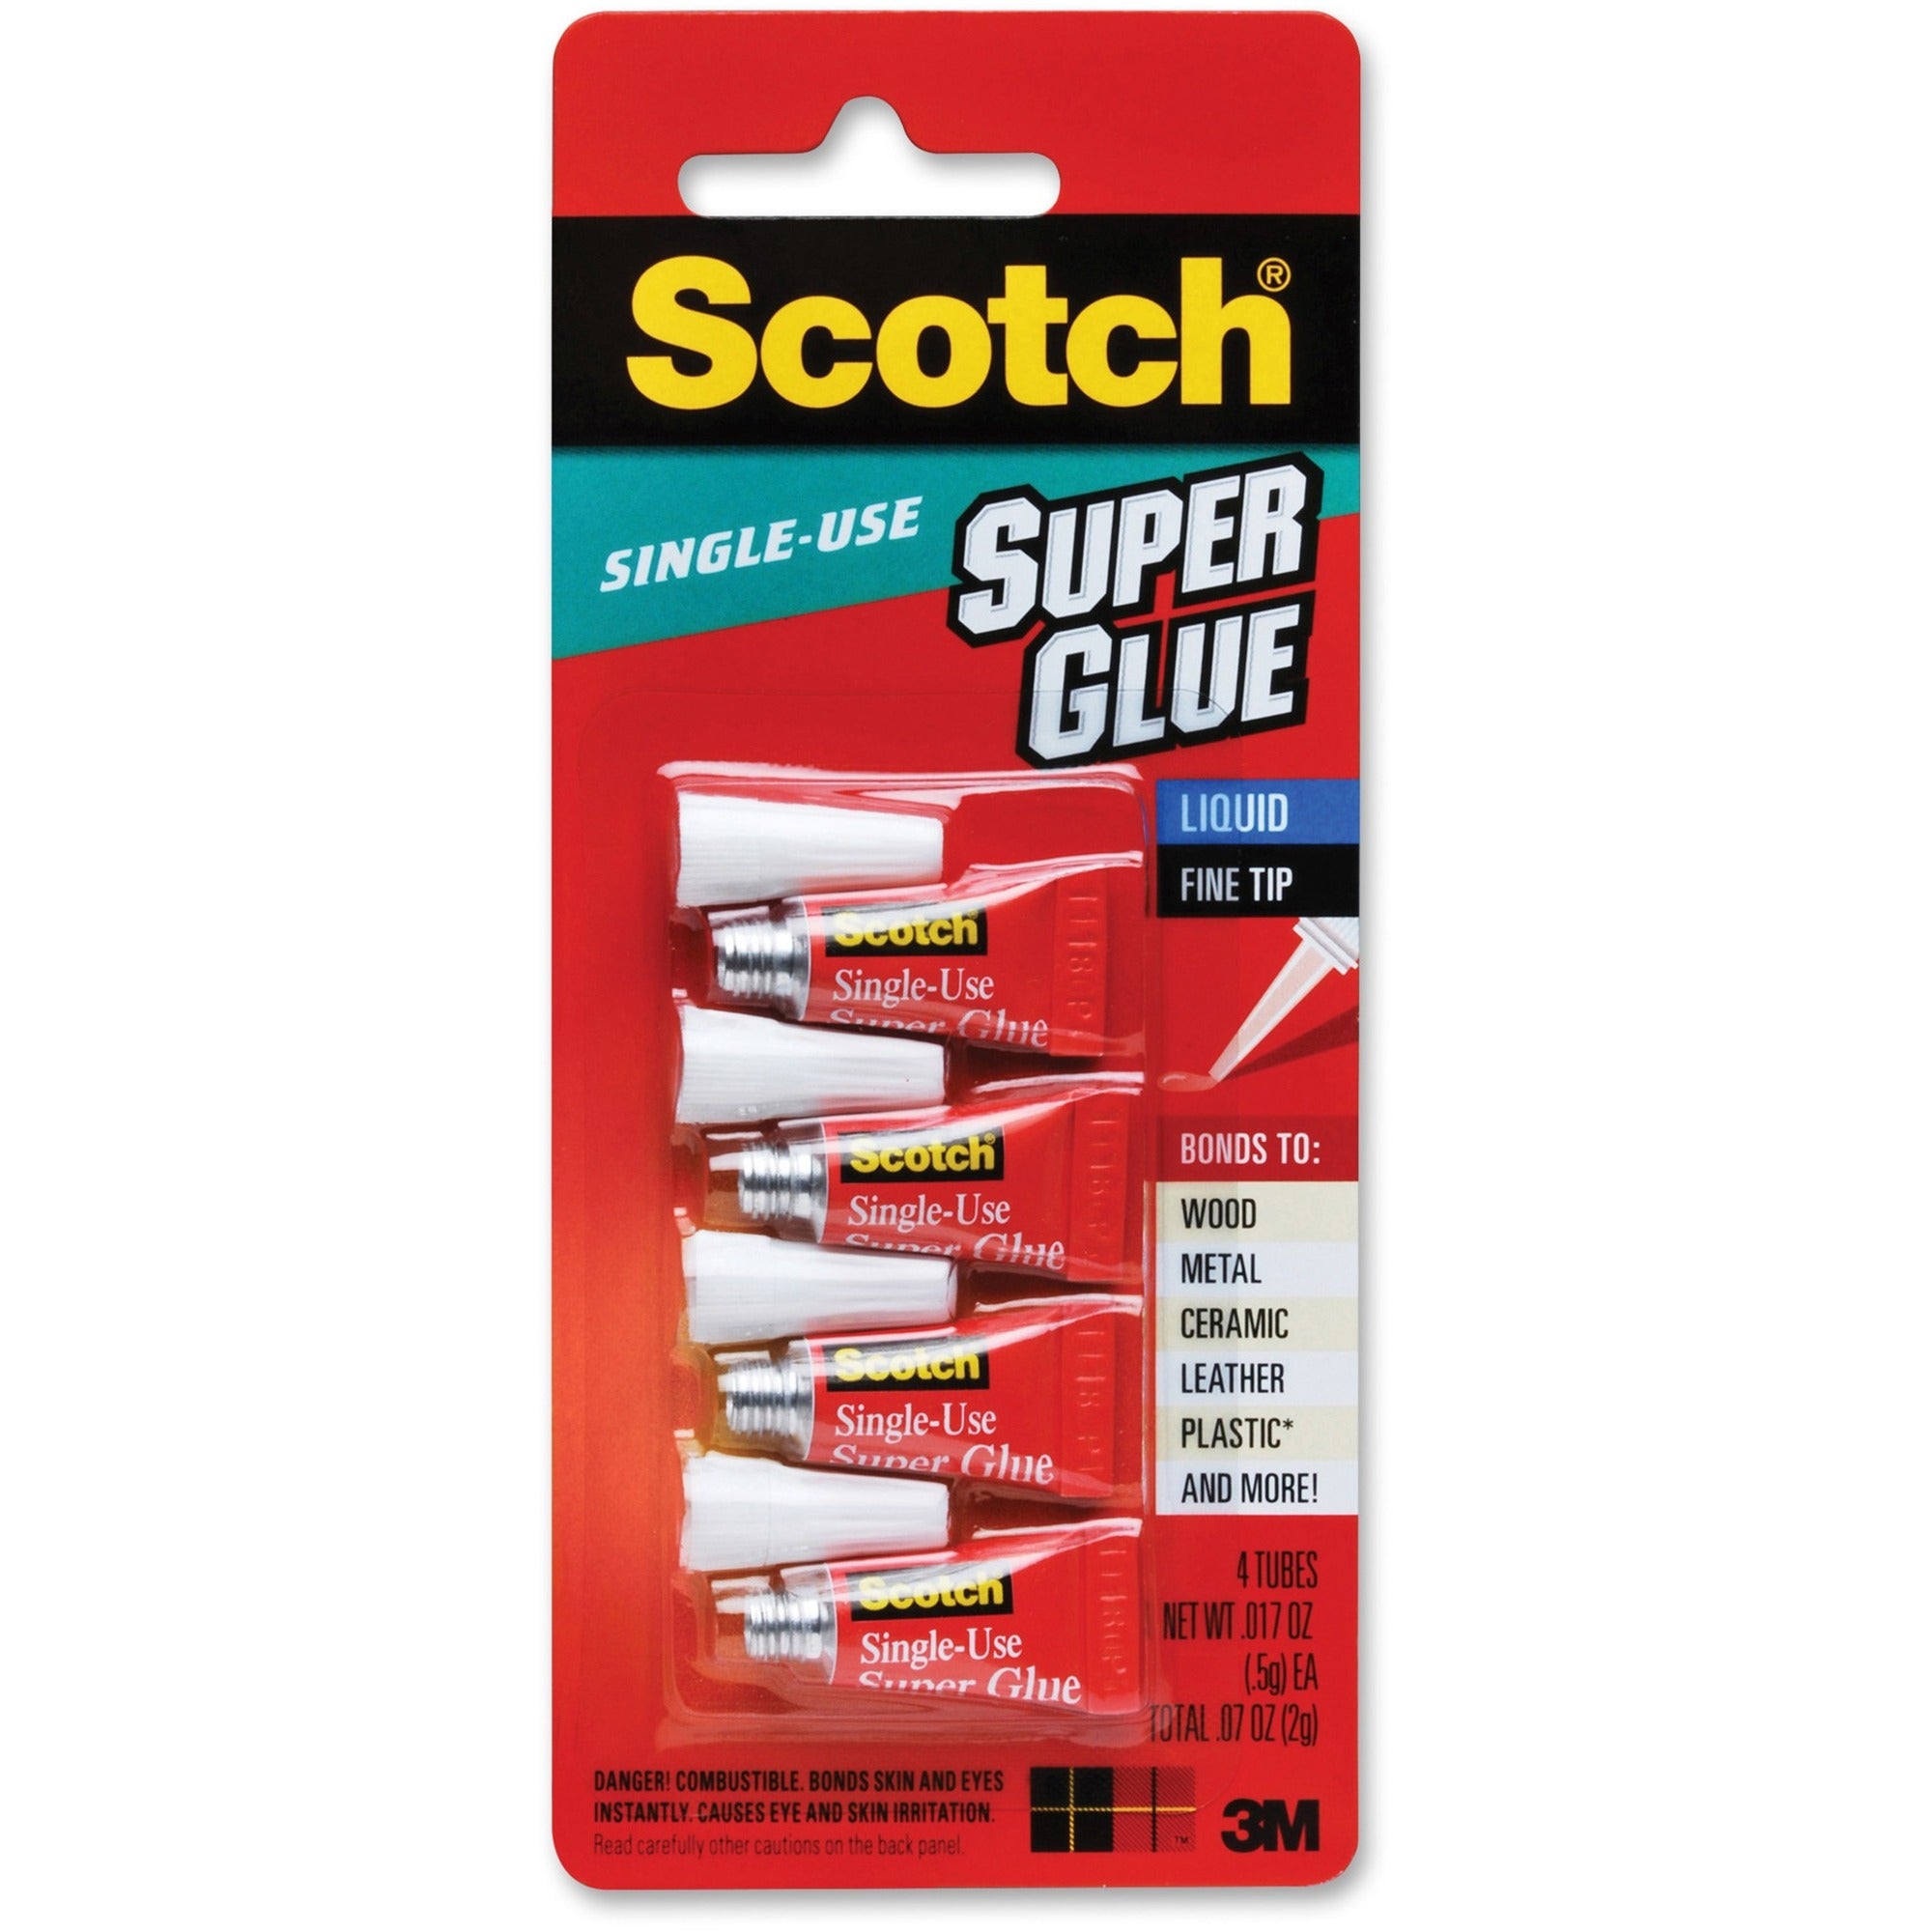 Scotch Super Glue Liquid - 0.05 grams Single-Use Tubes - 0.02 oz - 4 / Pack - Clear - 